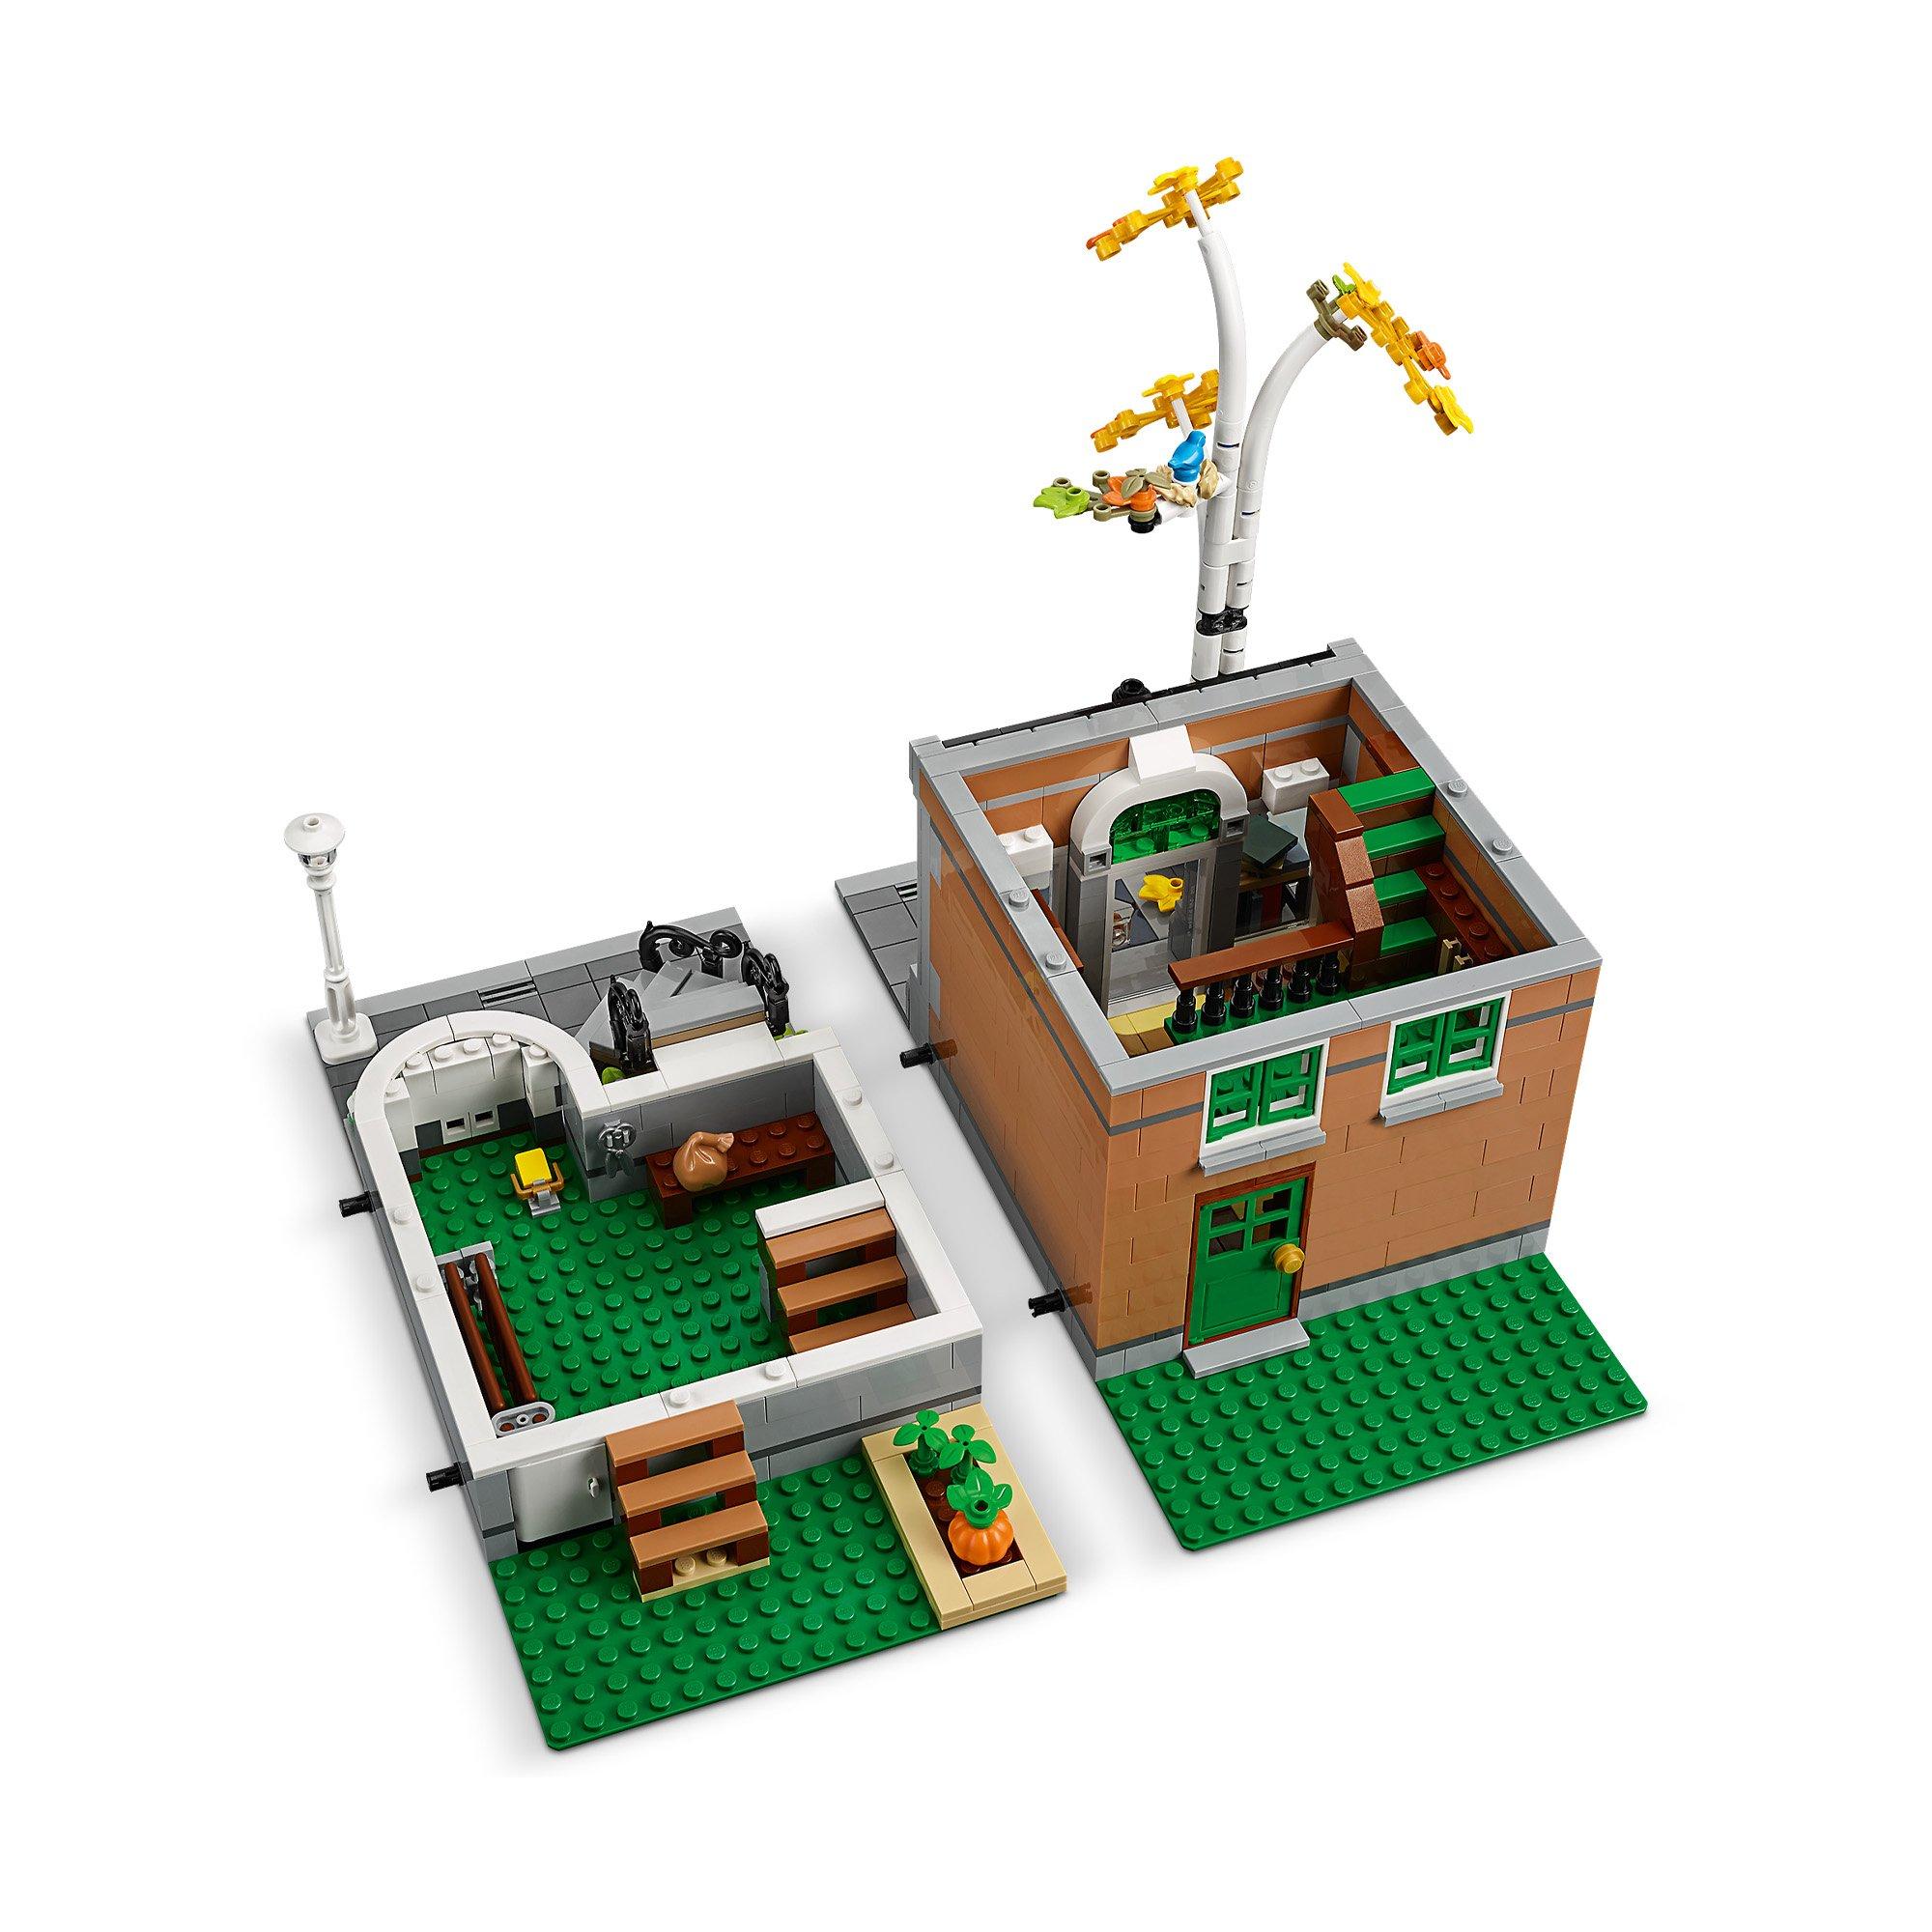 LEGO®  10270 La librairie  